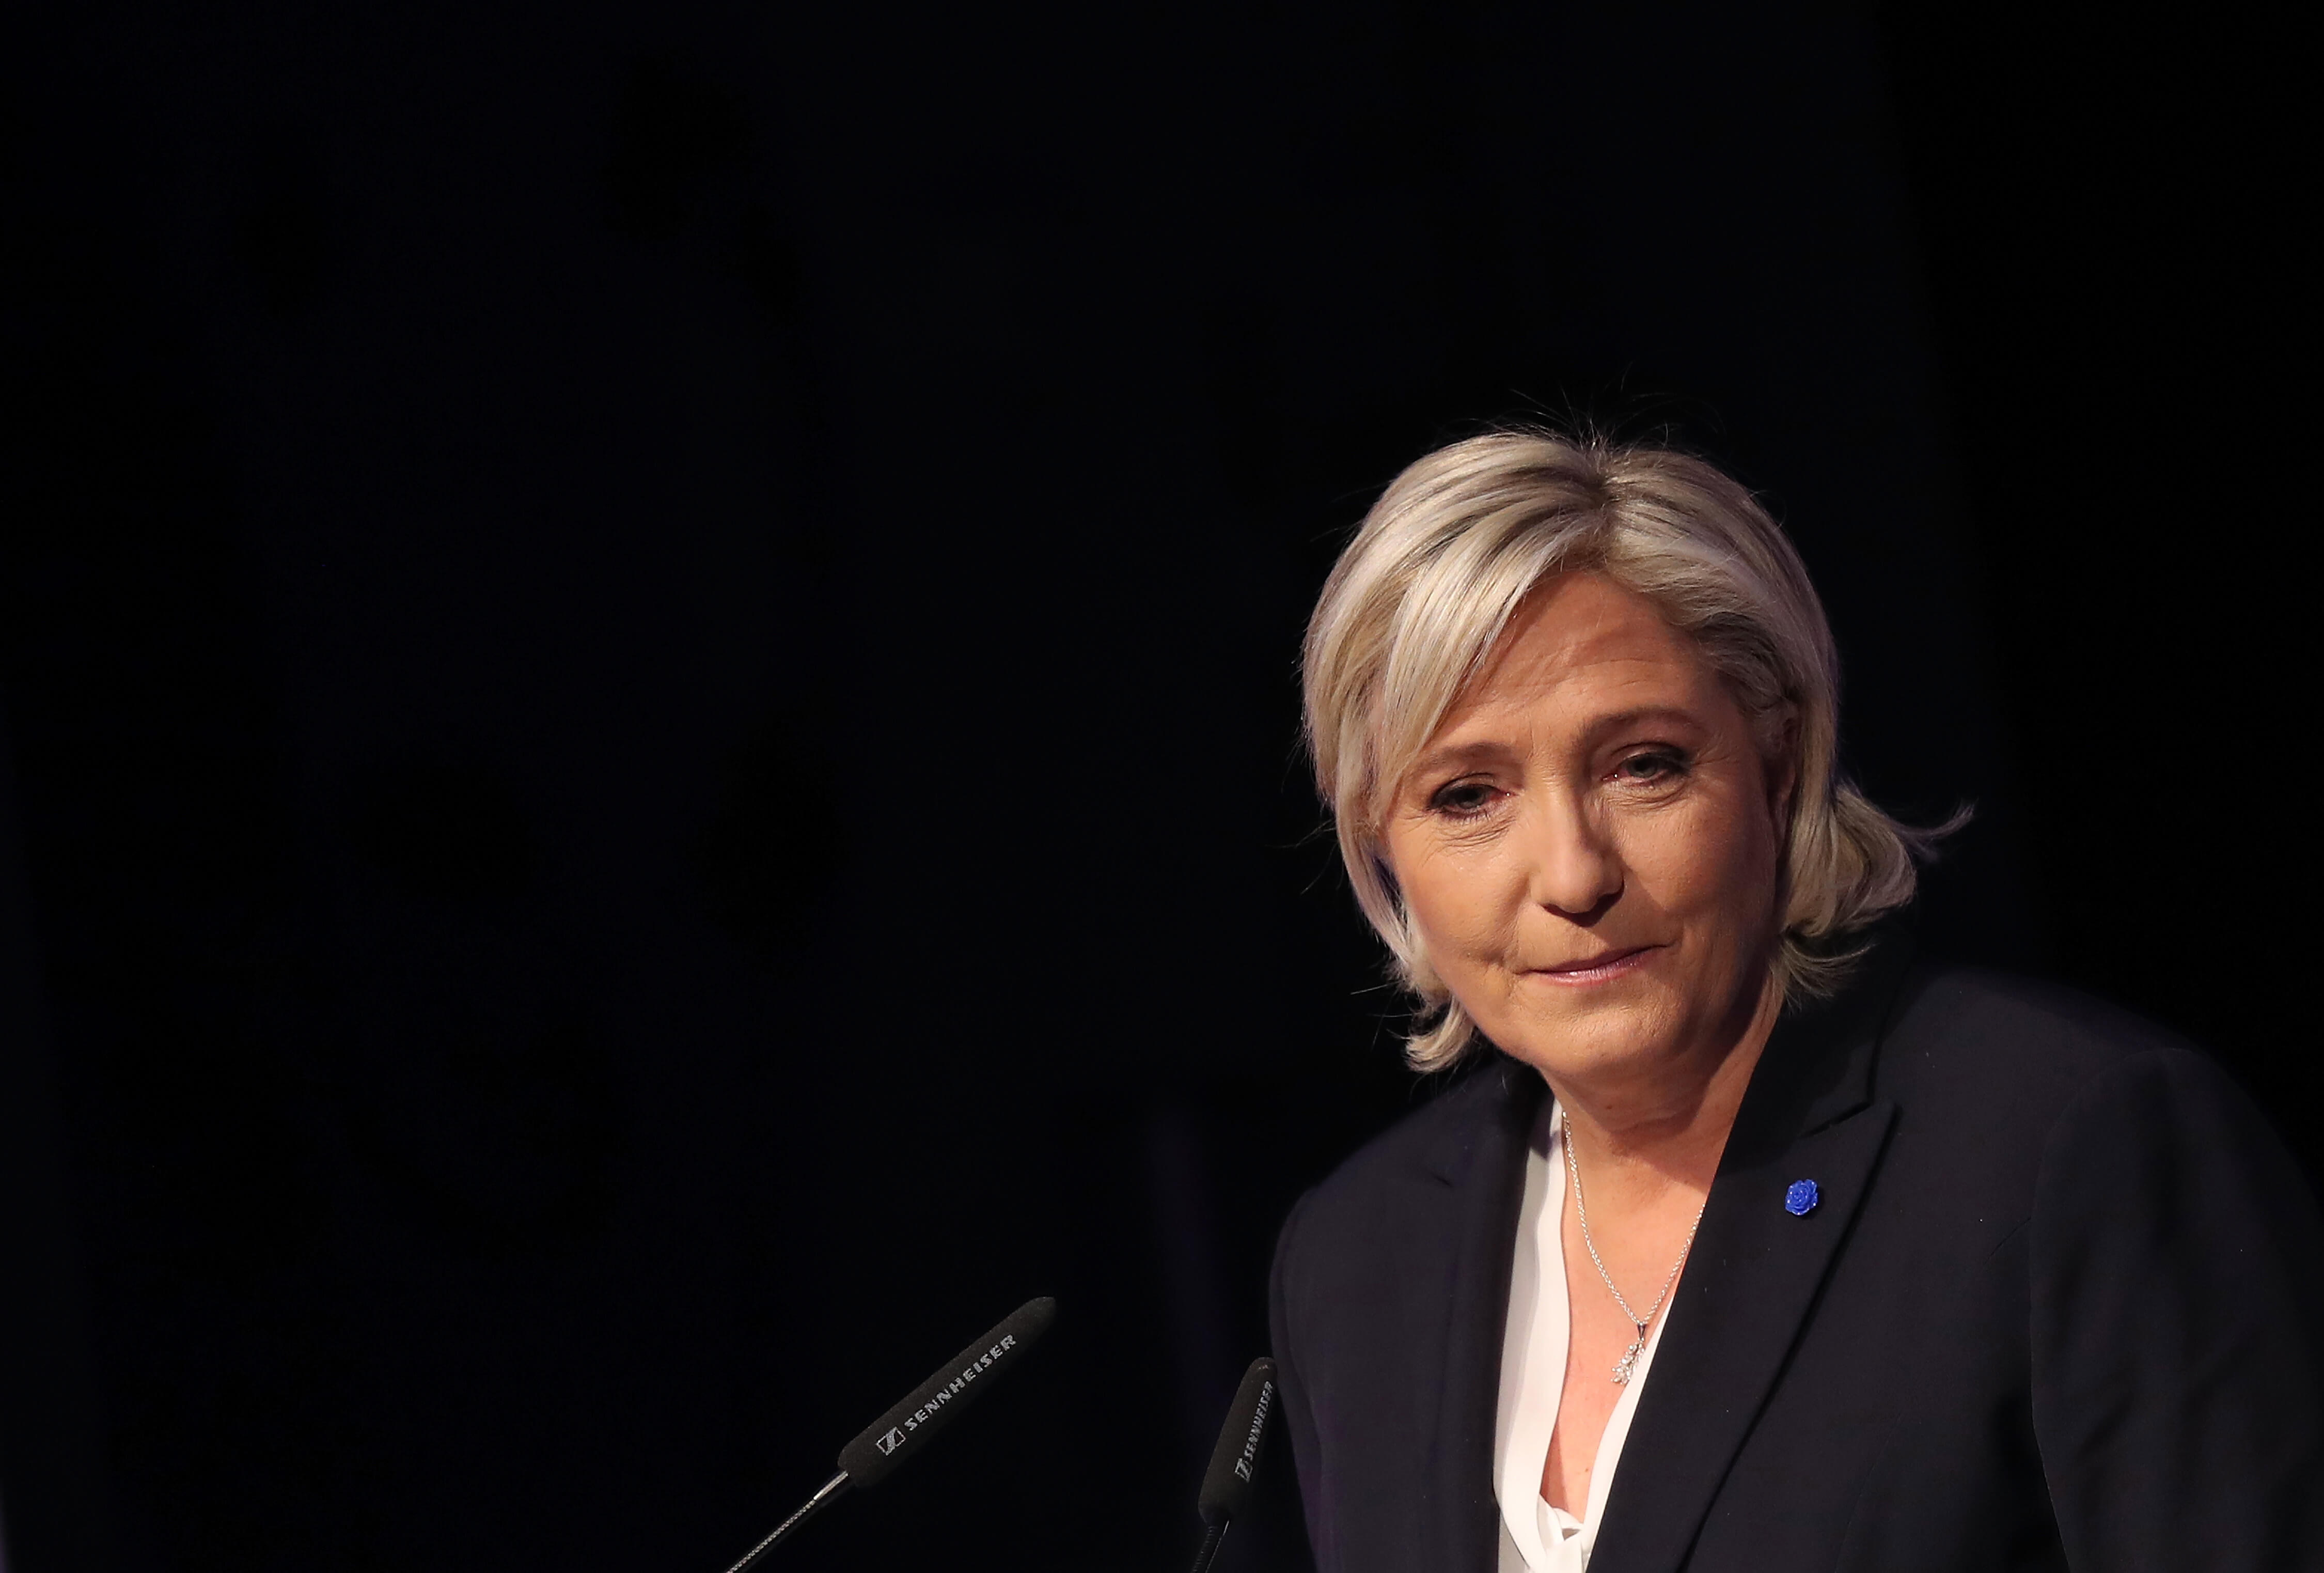 Marine Le Pen, líder del partido ultraderechista francés Frente Nacional